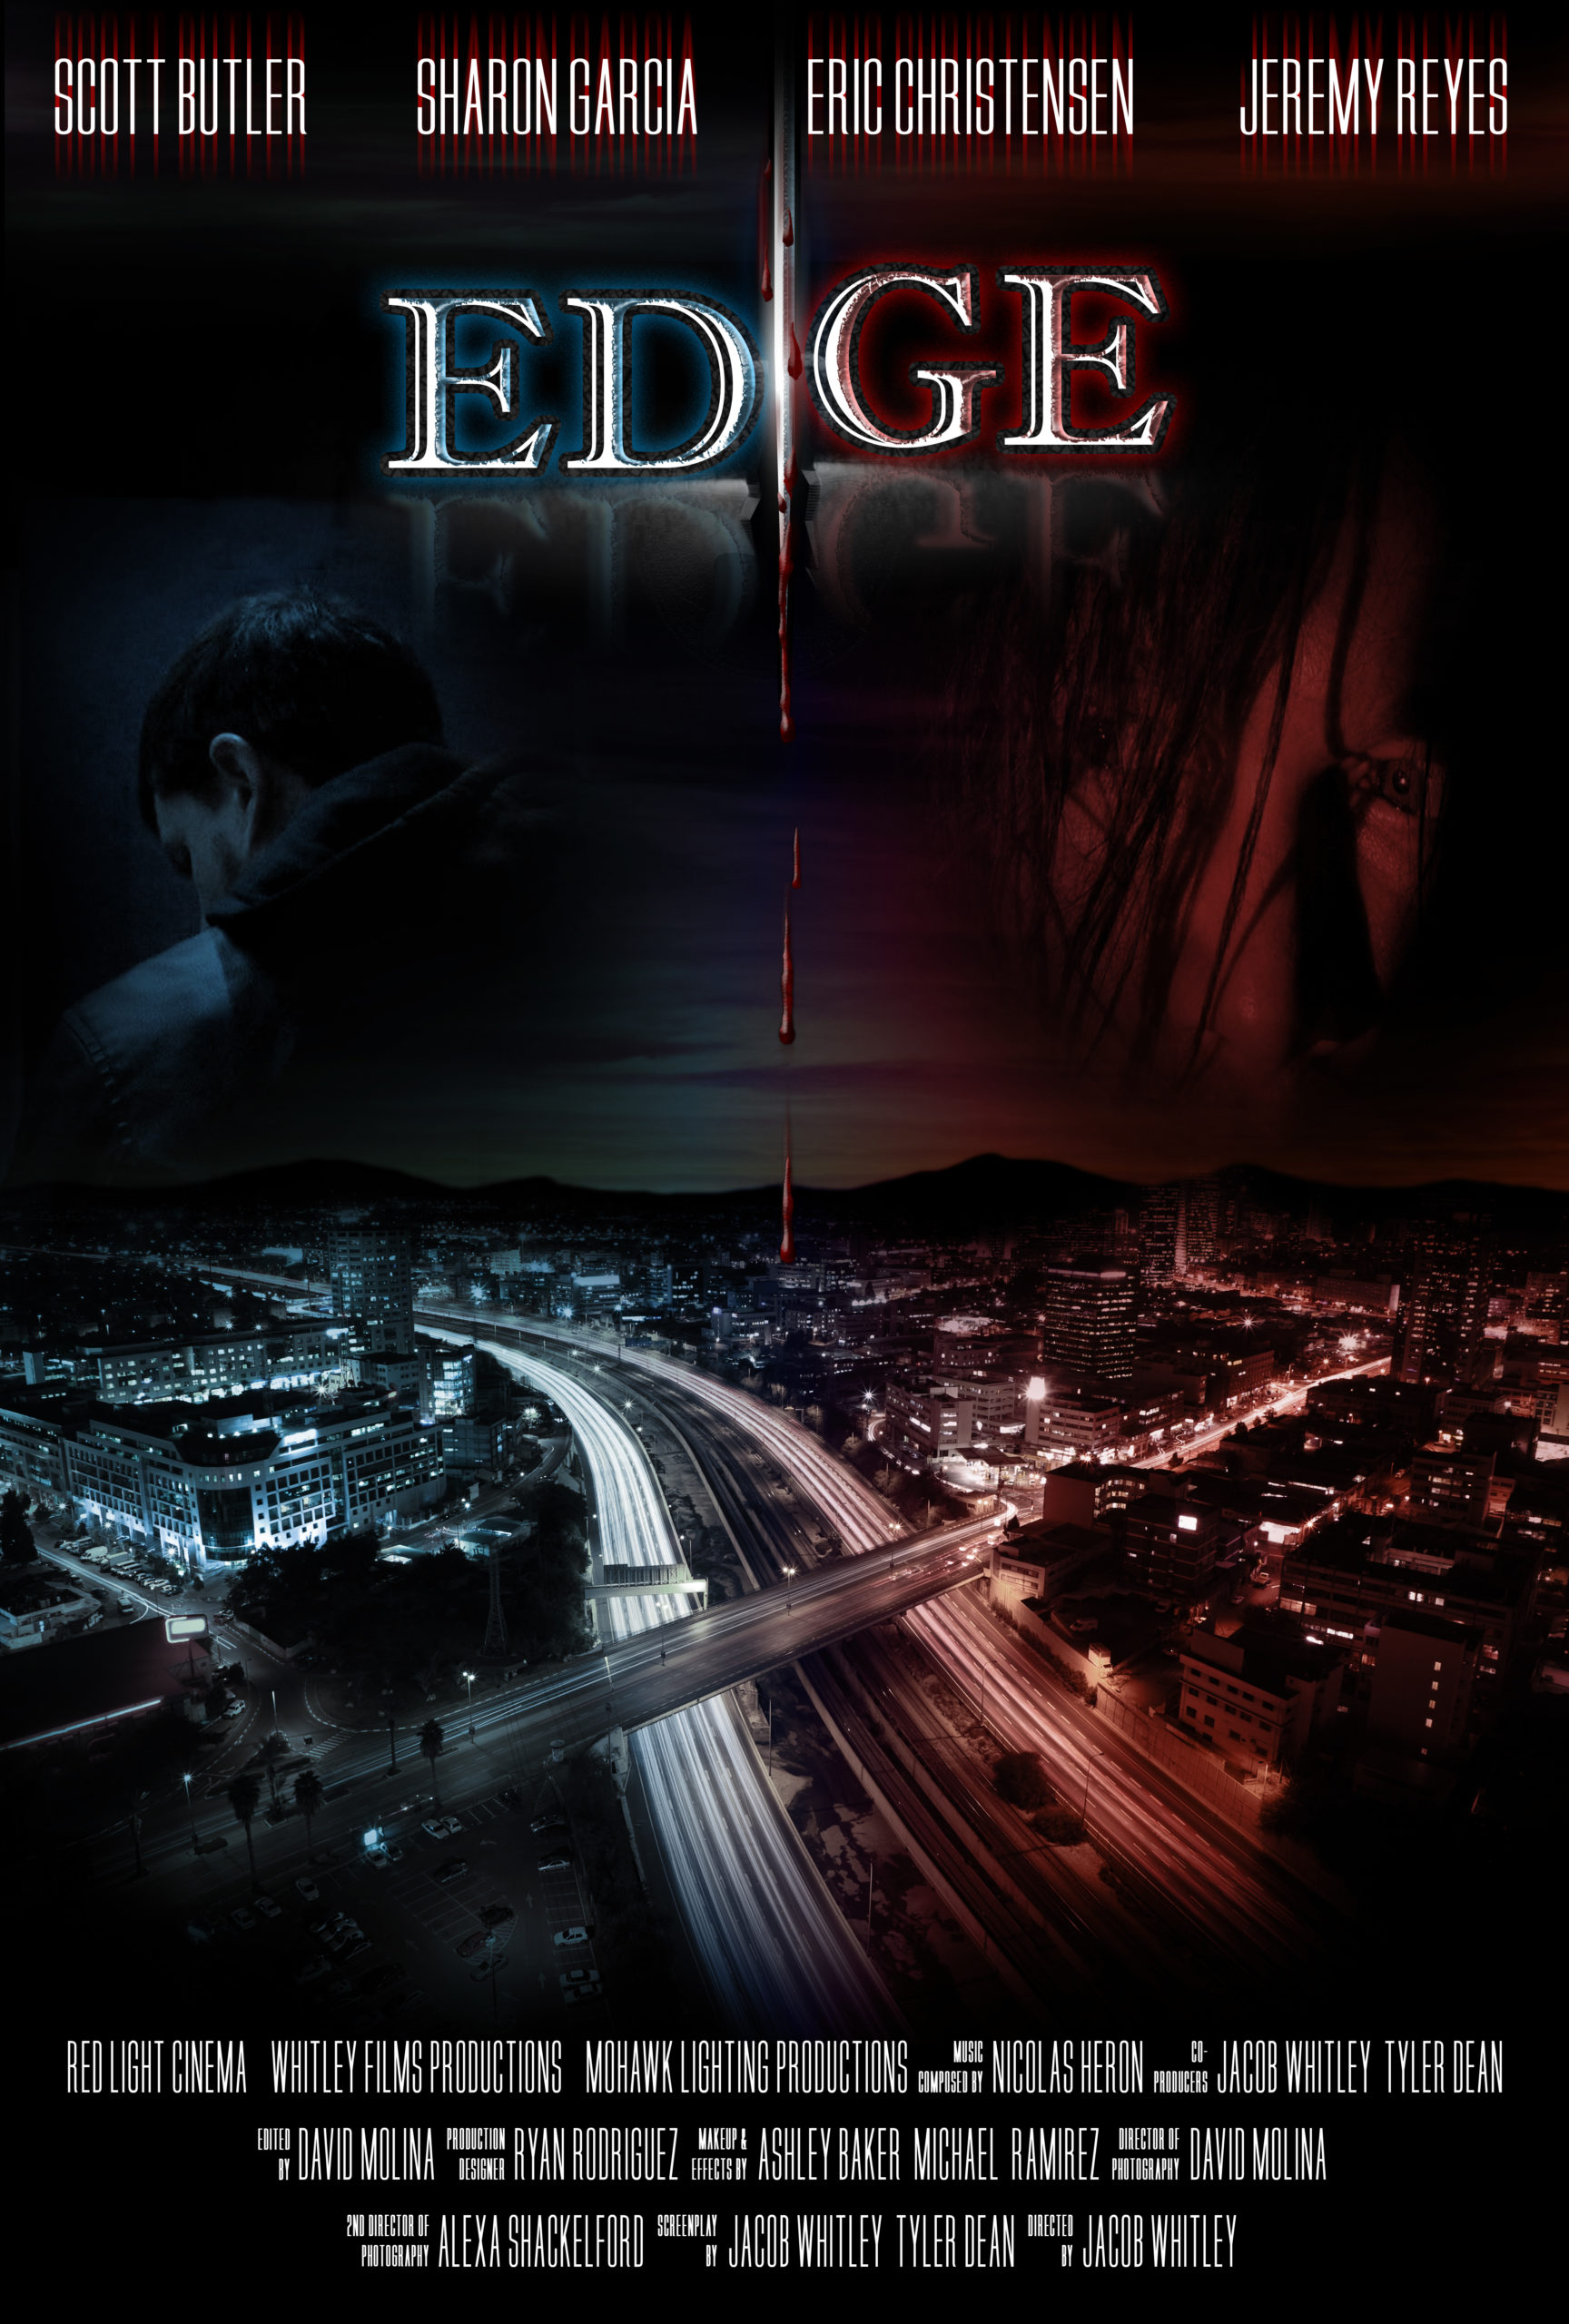 Edge Movie poster